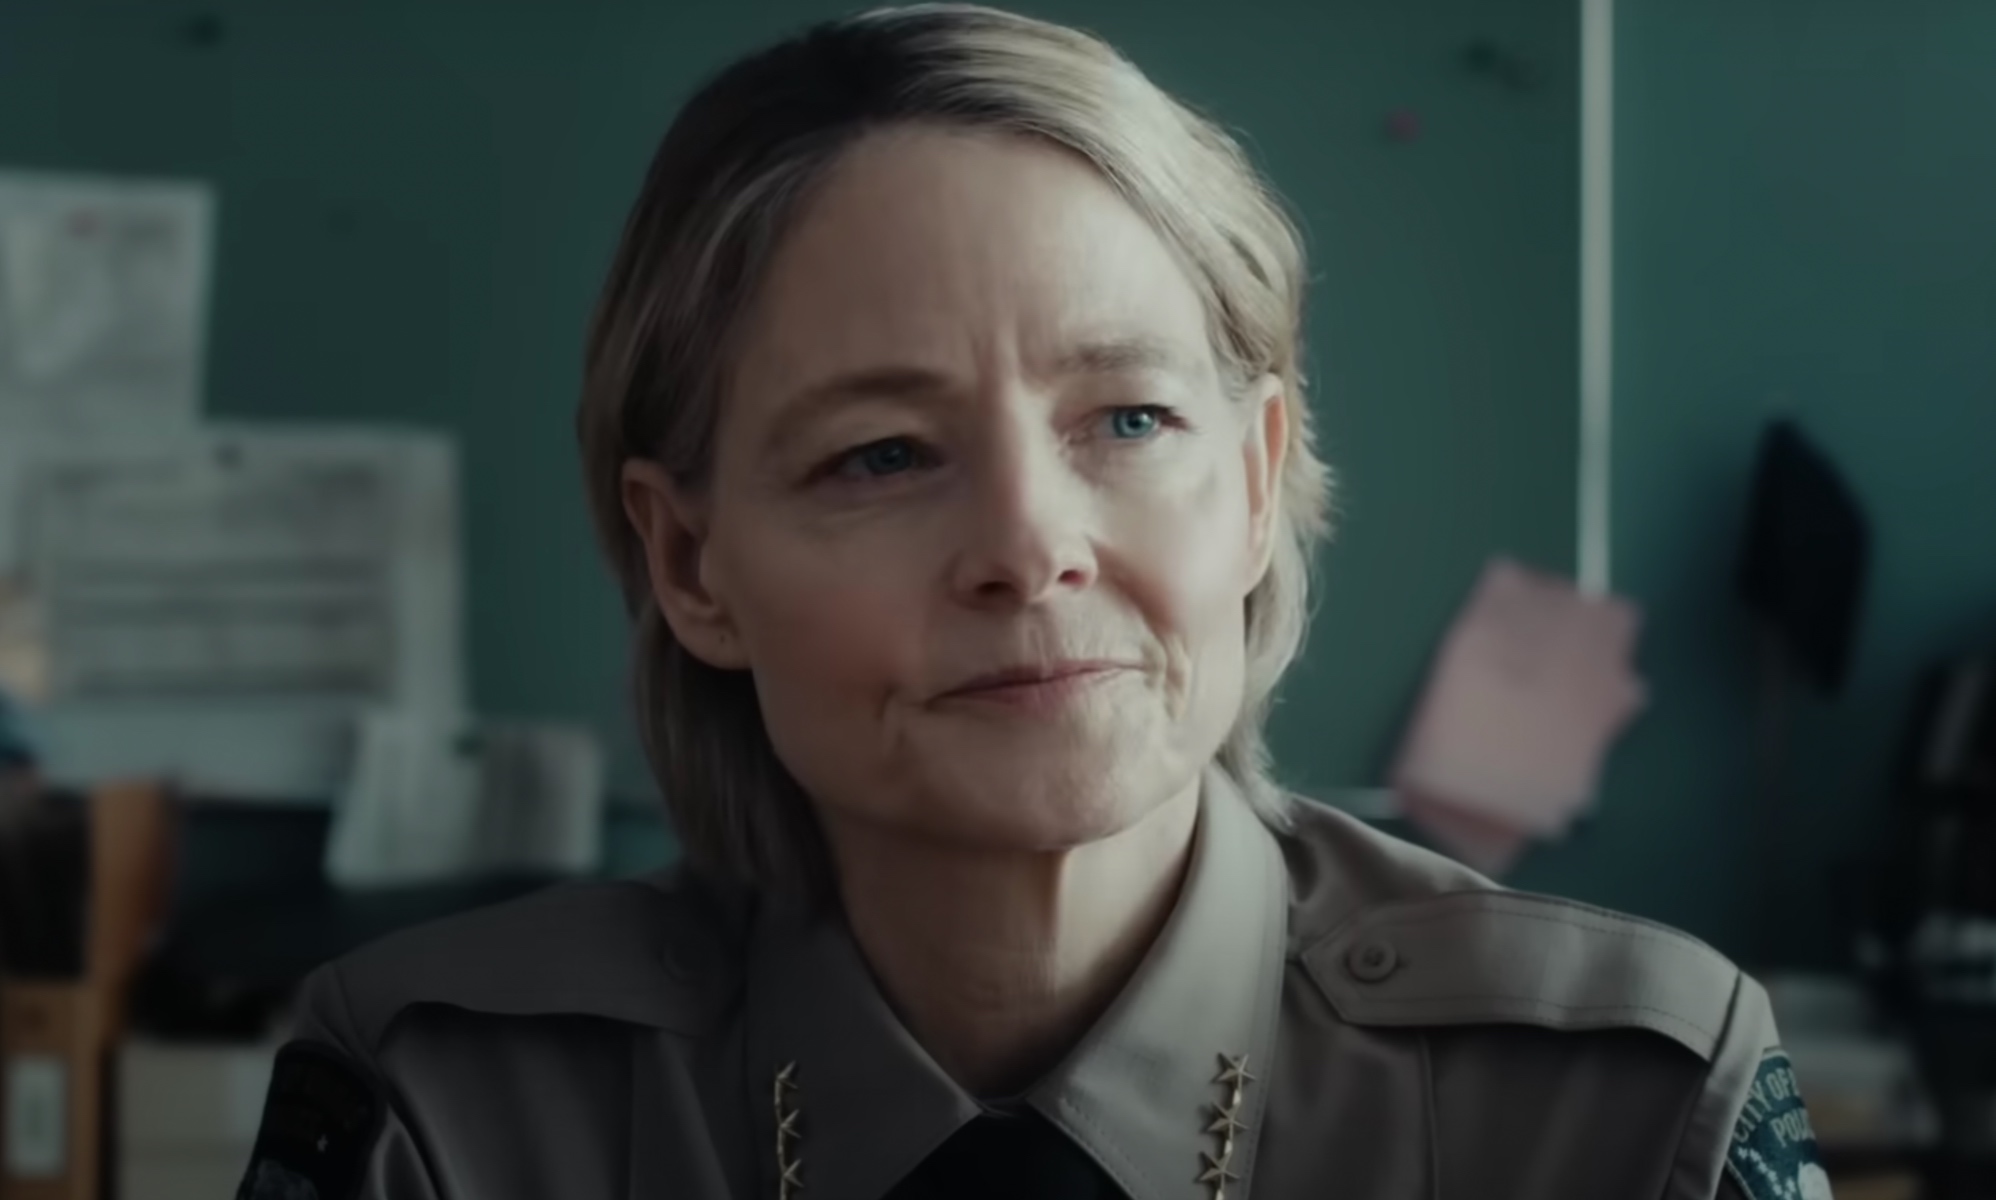 True Detective season 4 trailer: Jodie Foster gets close to nemesis